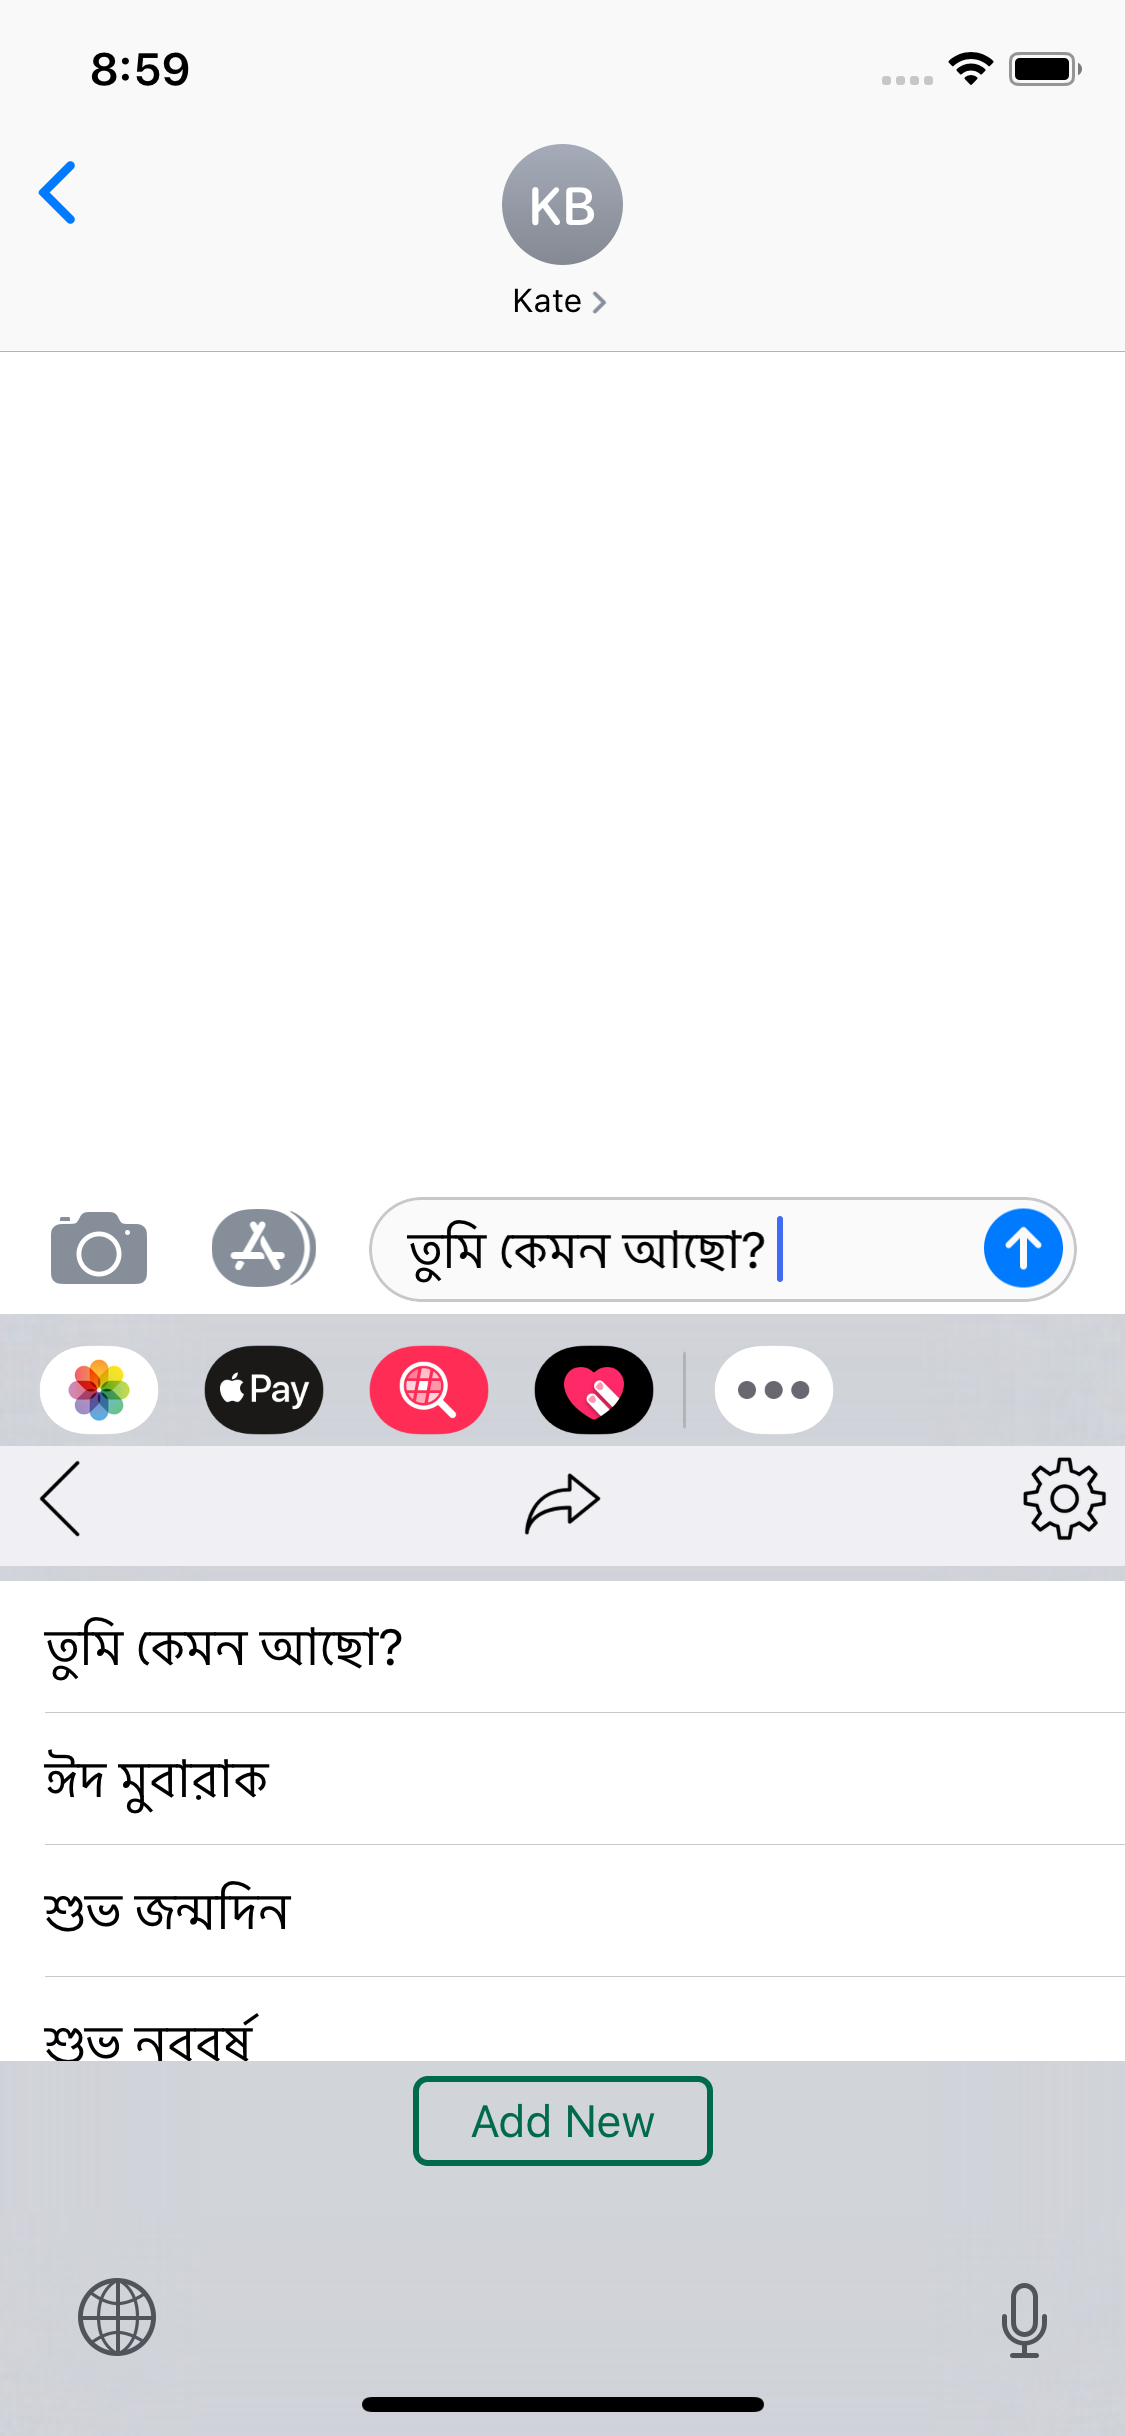 windows phone bangla keyboard